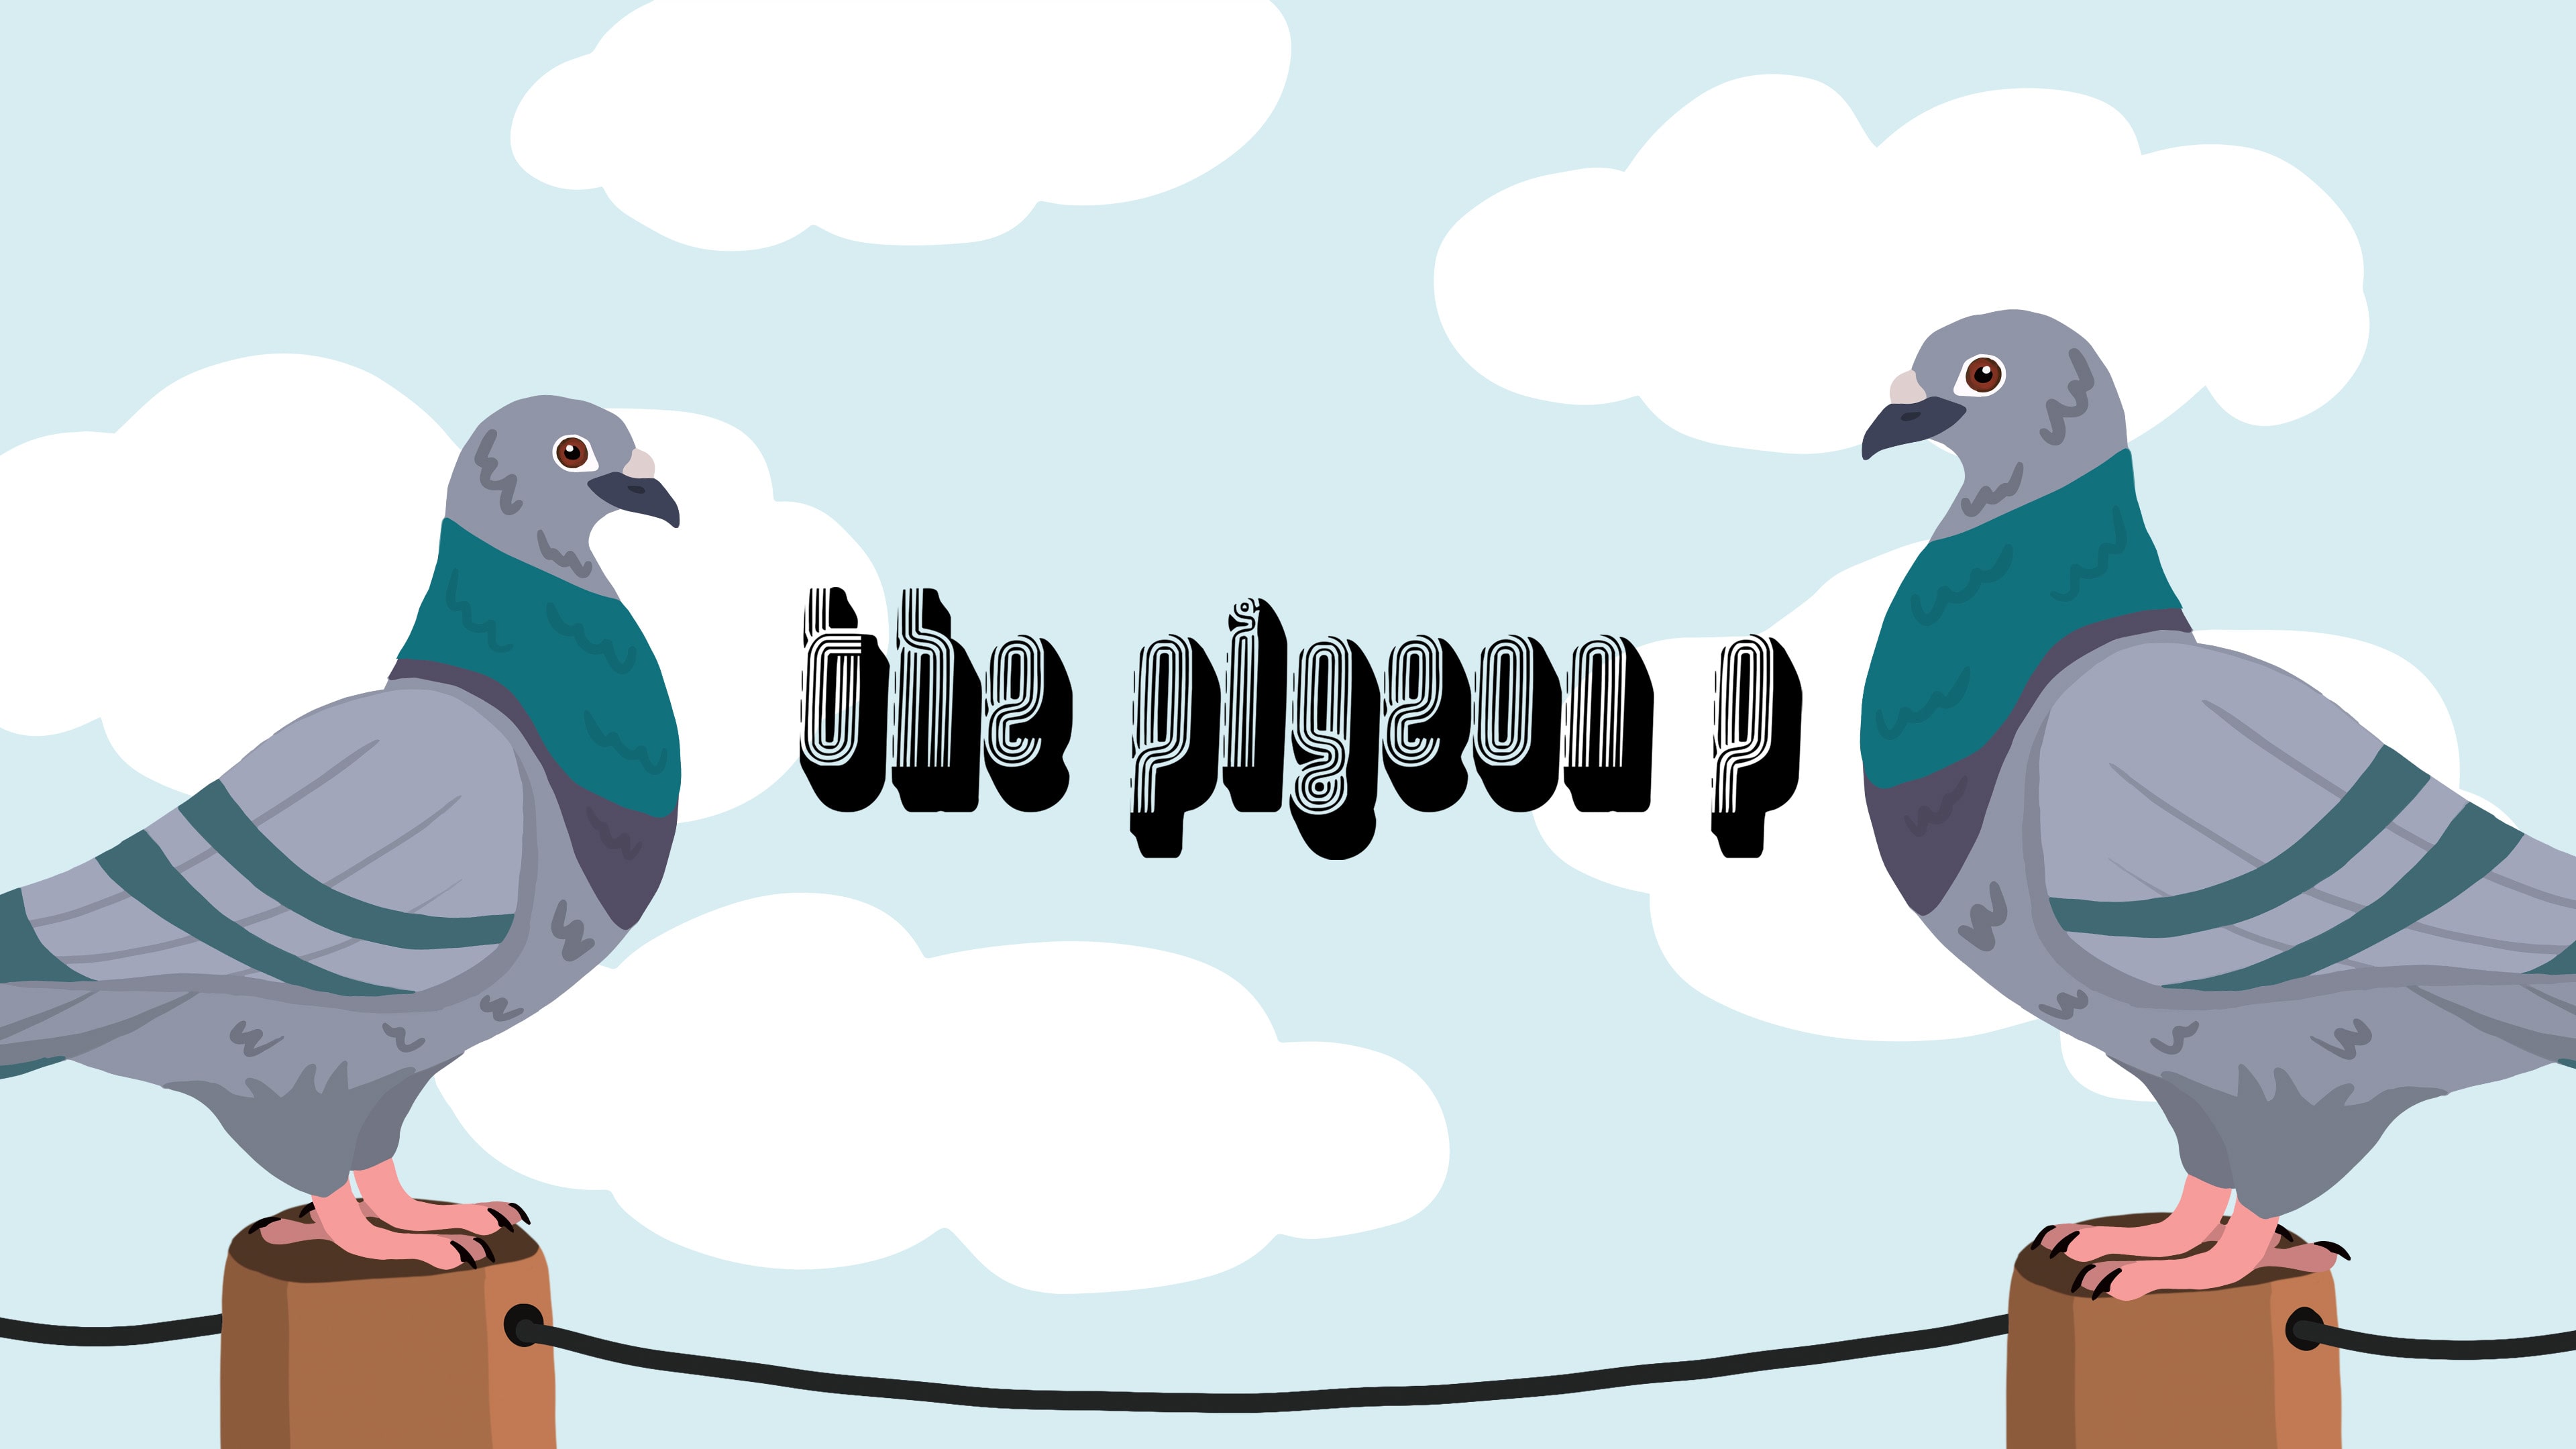 The Pigeon P